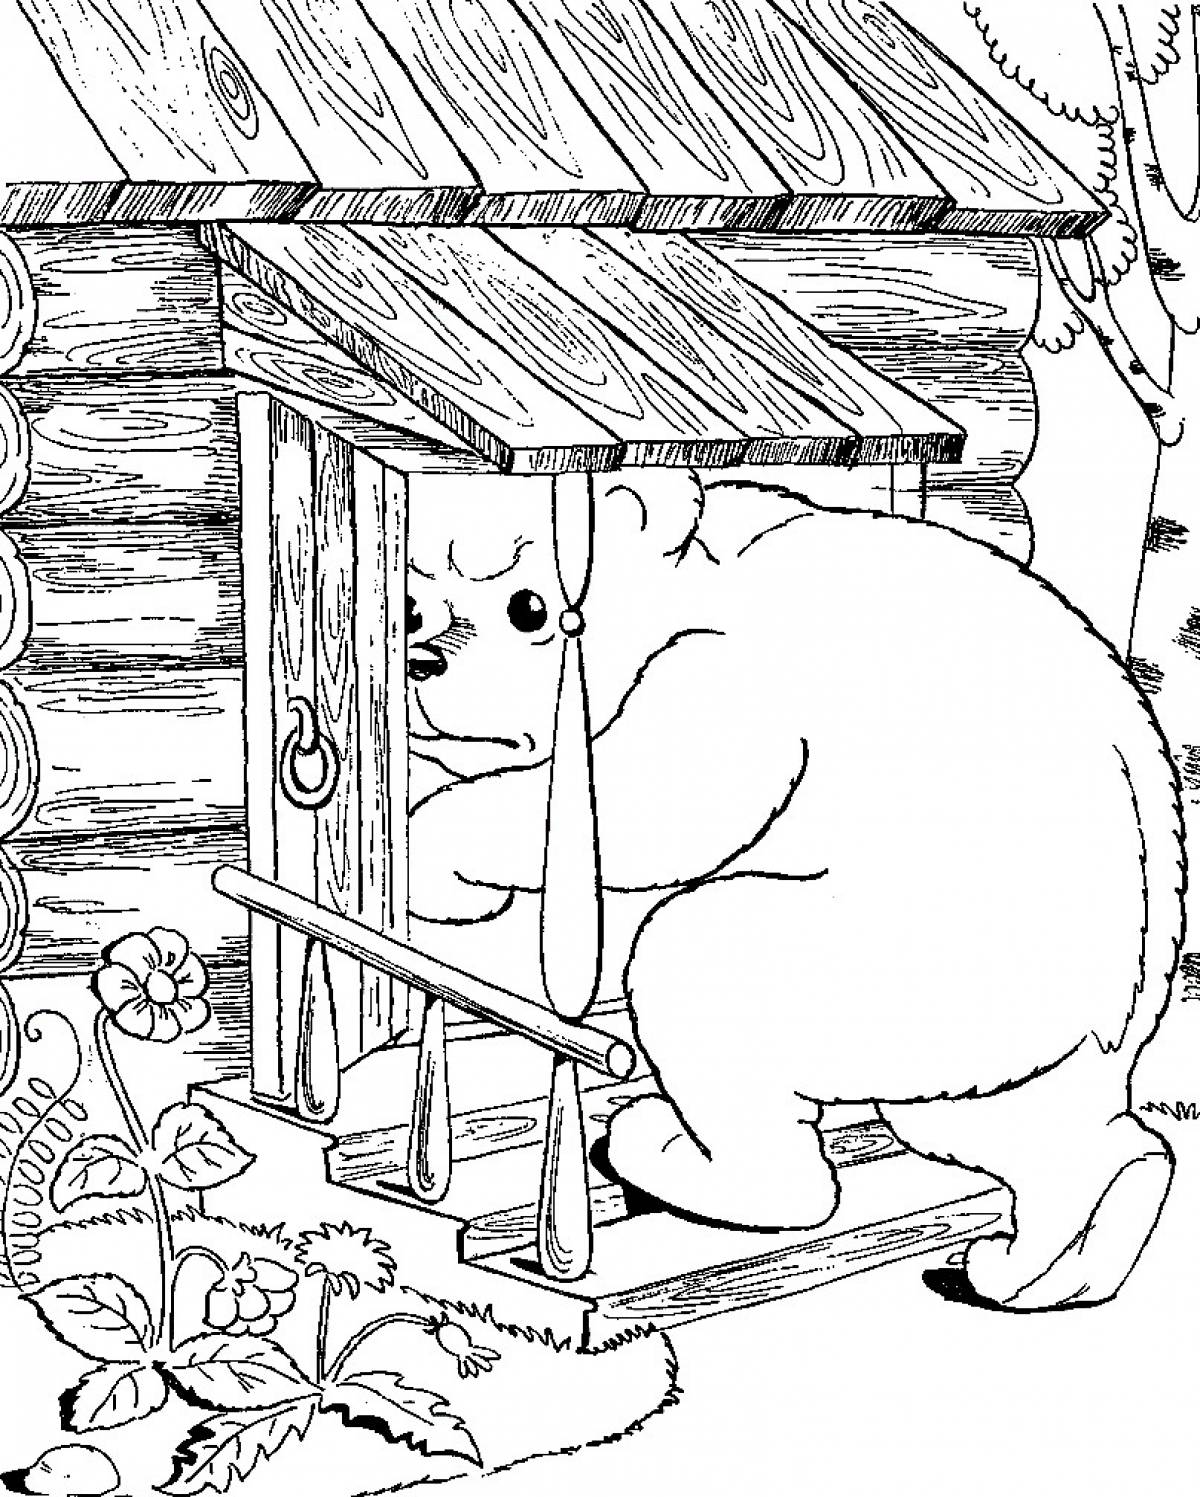 The bear climbs into the tower